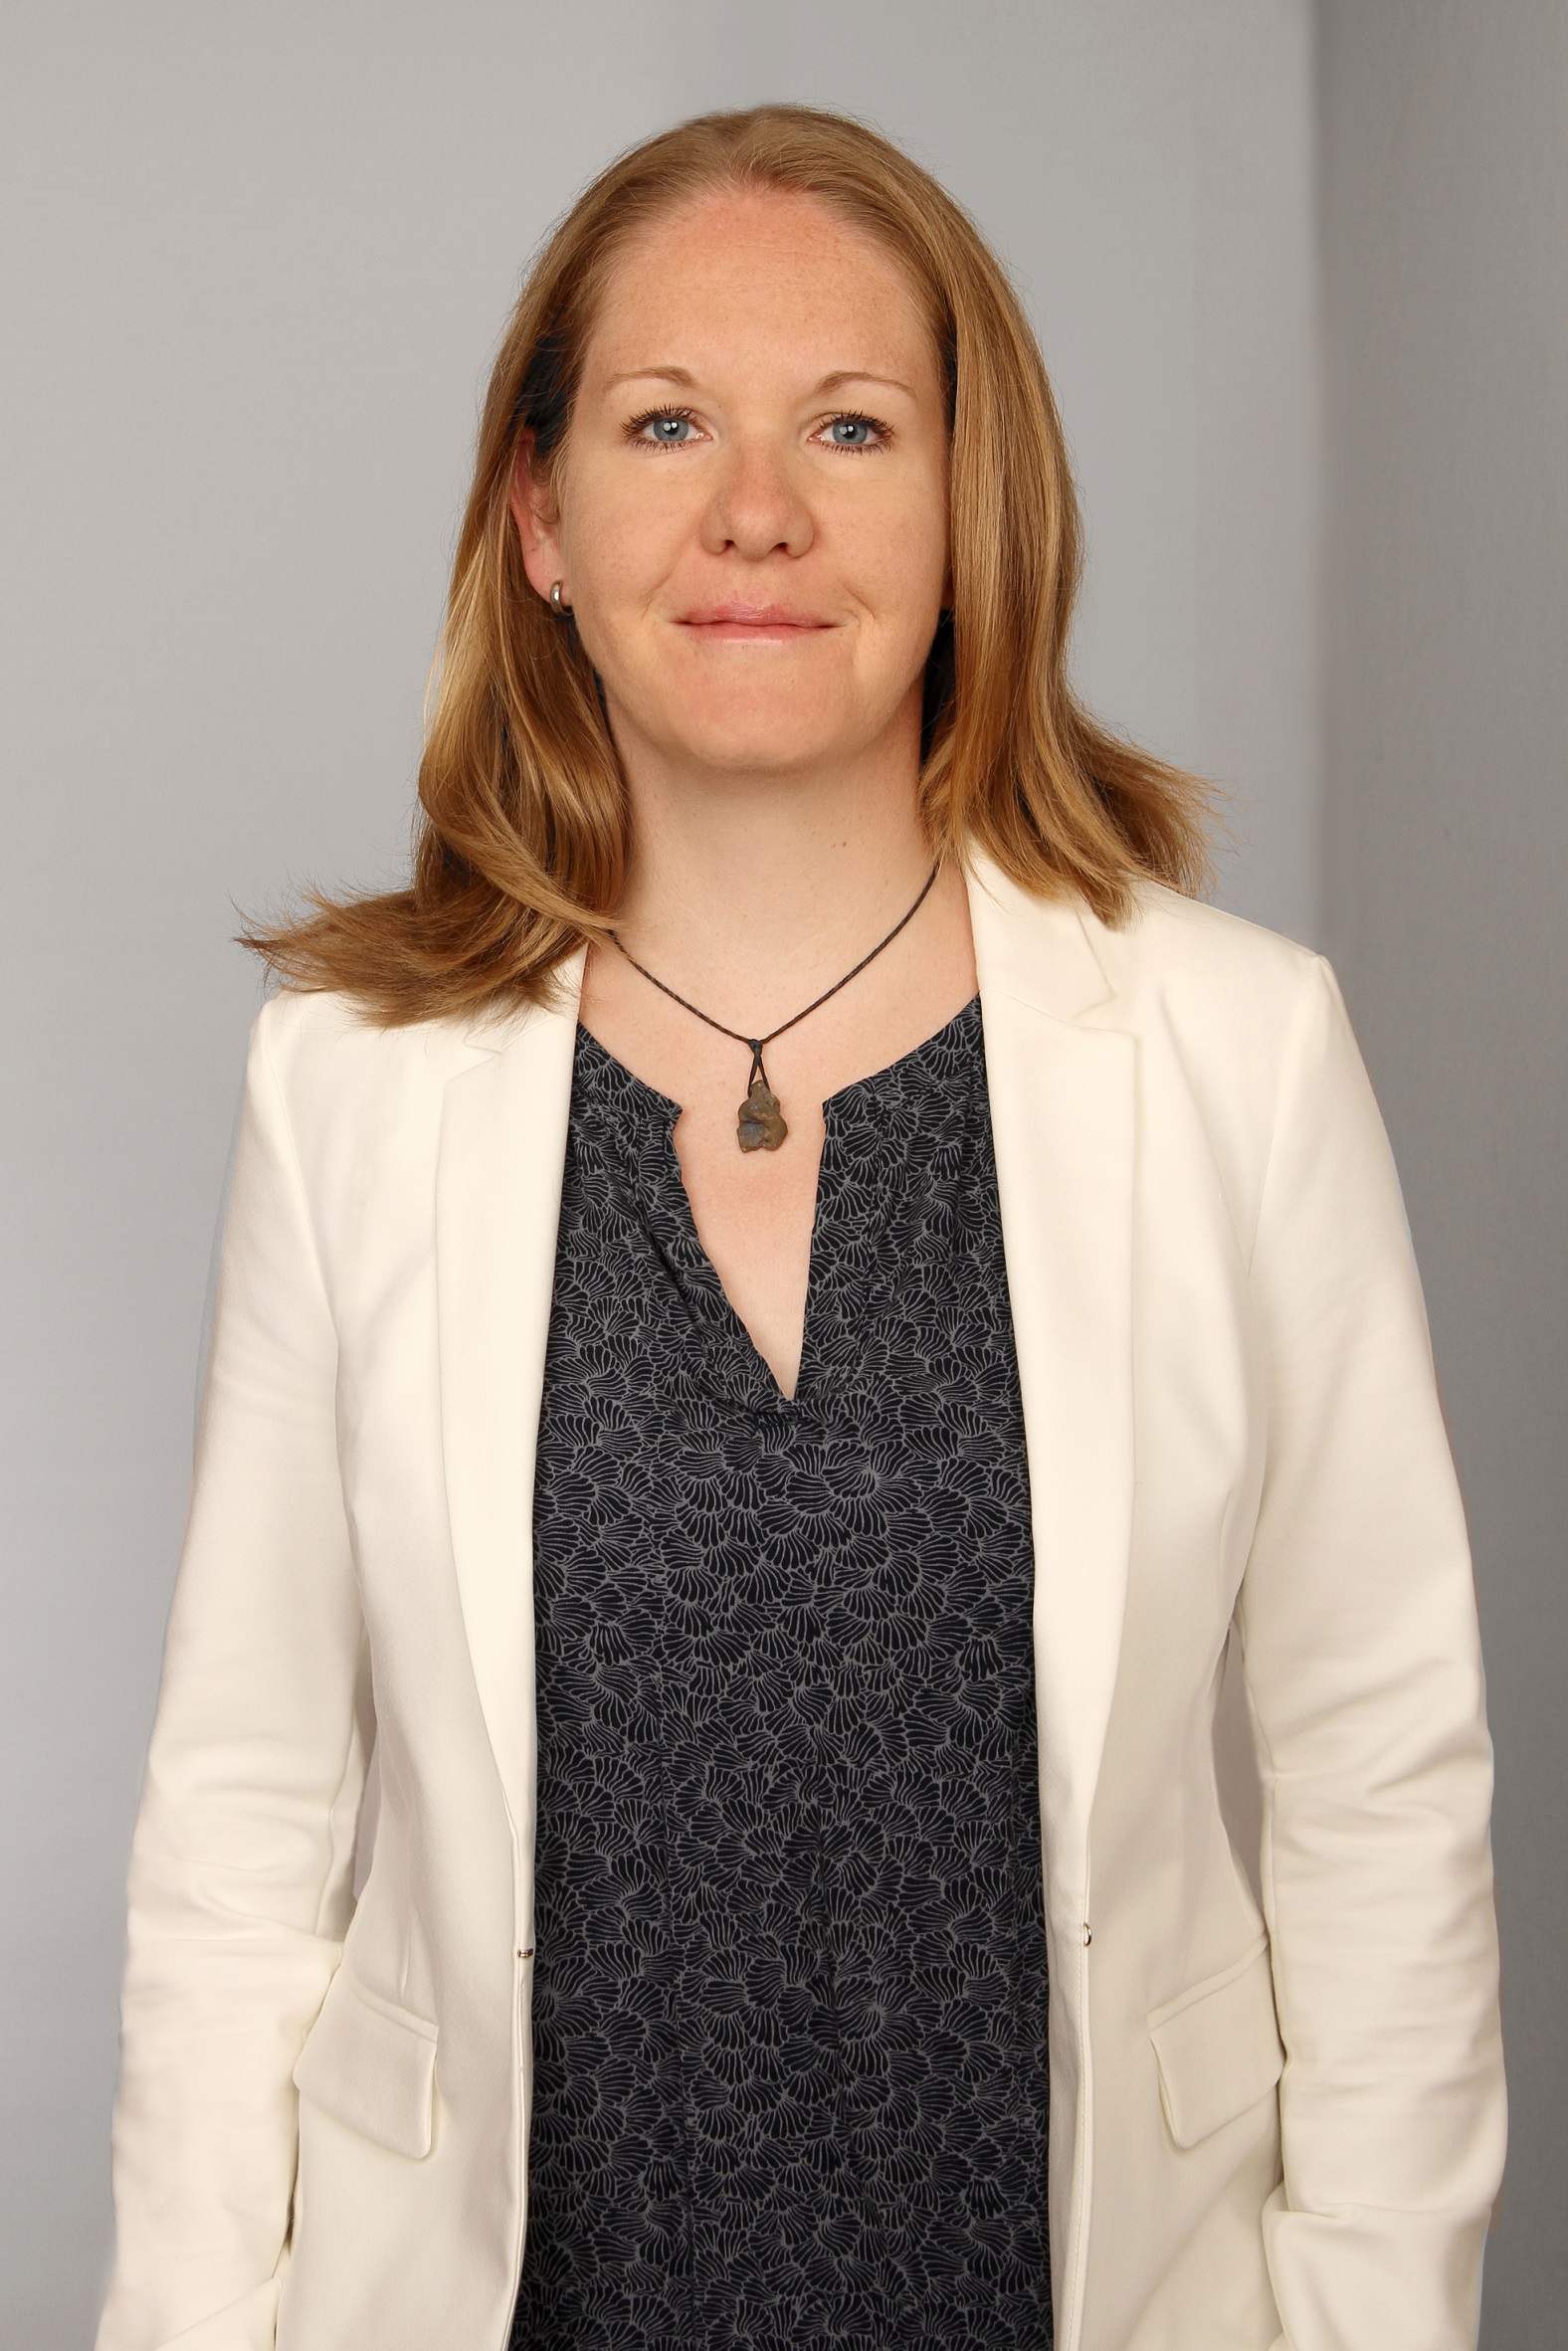  Juliane Kröning - Bilanzbuchhalterin (IHK) - Buchhalterin in Hamburg